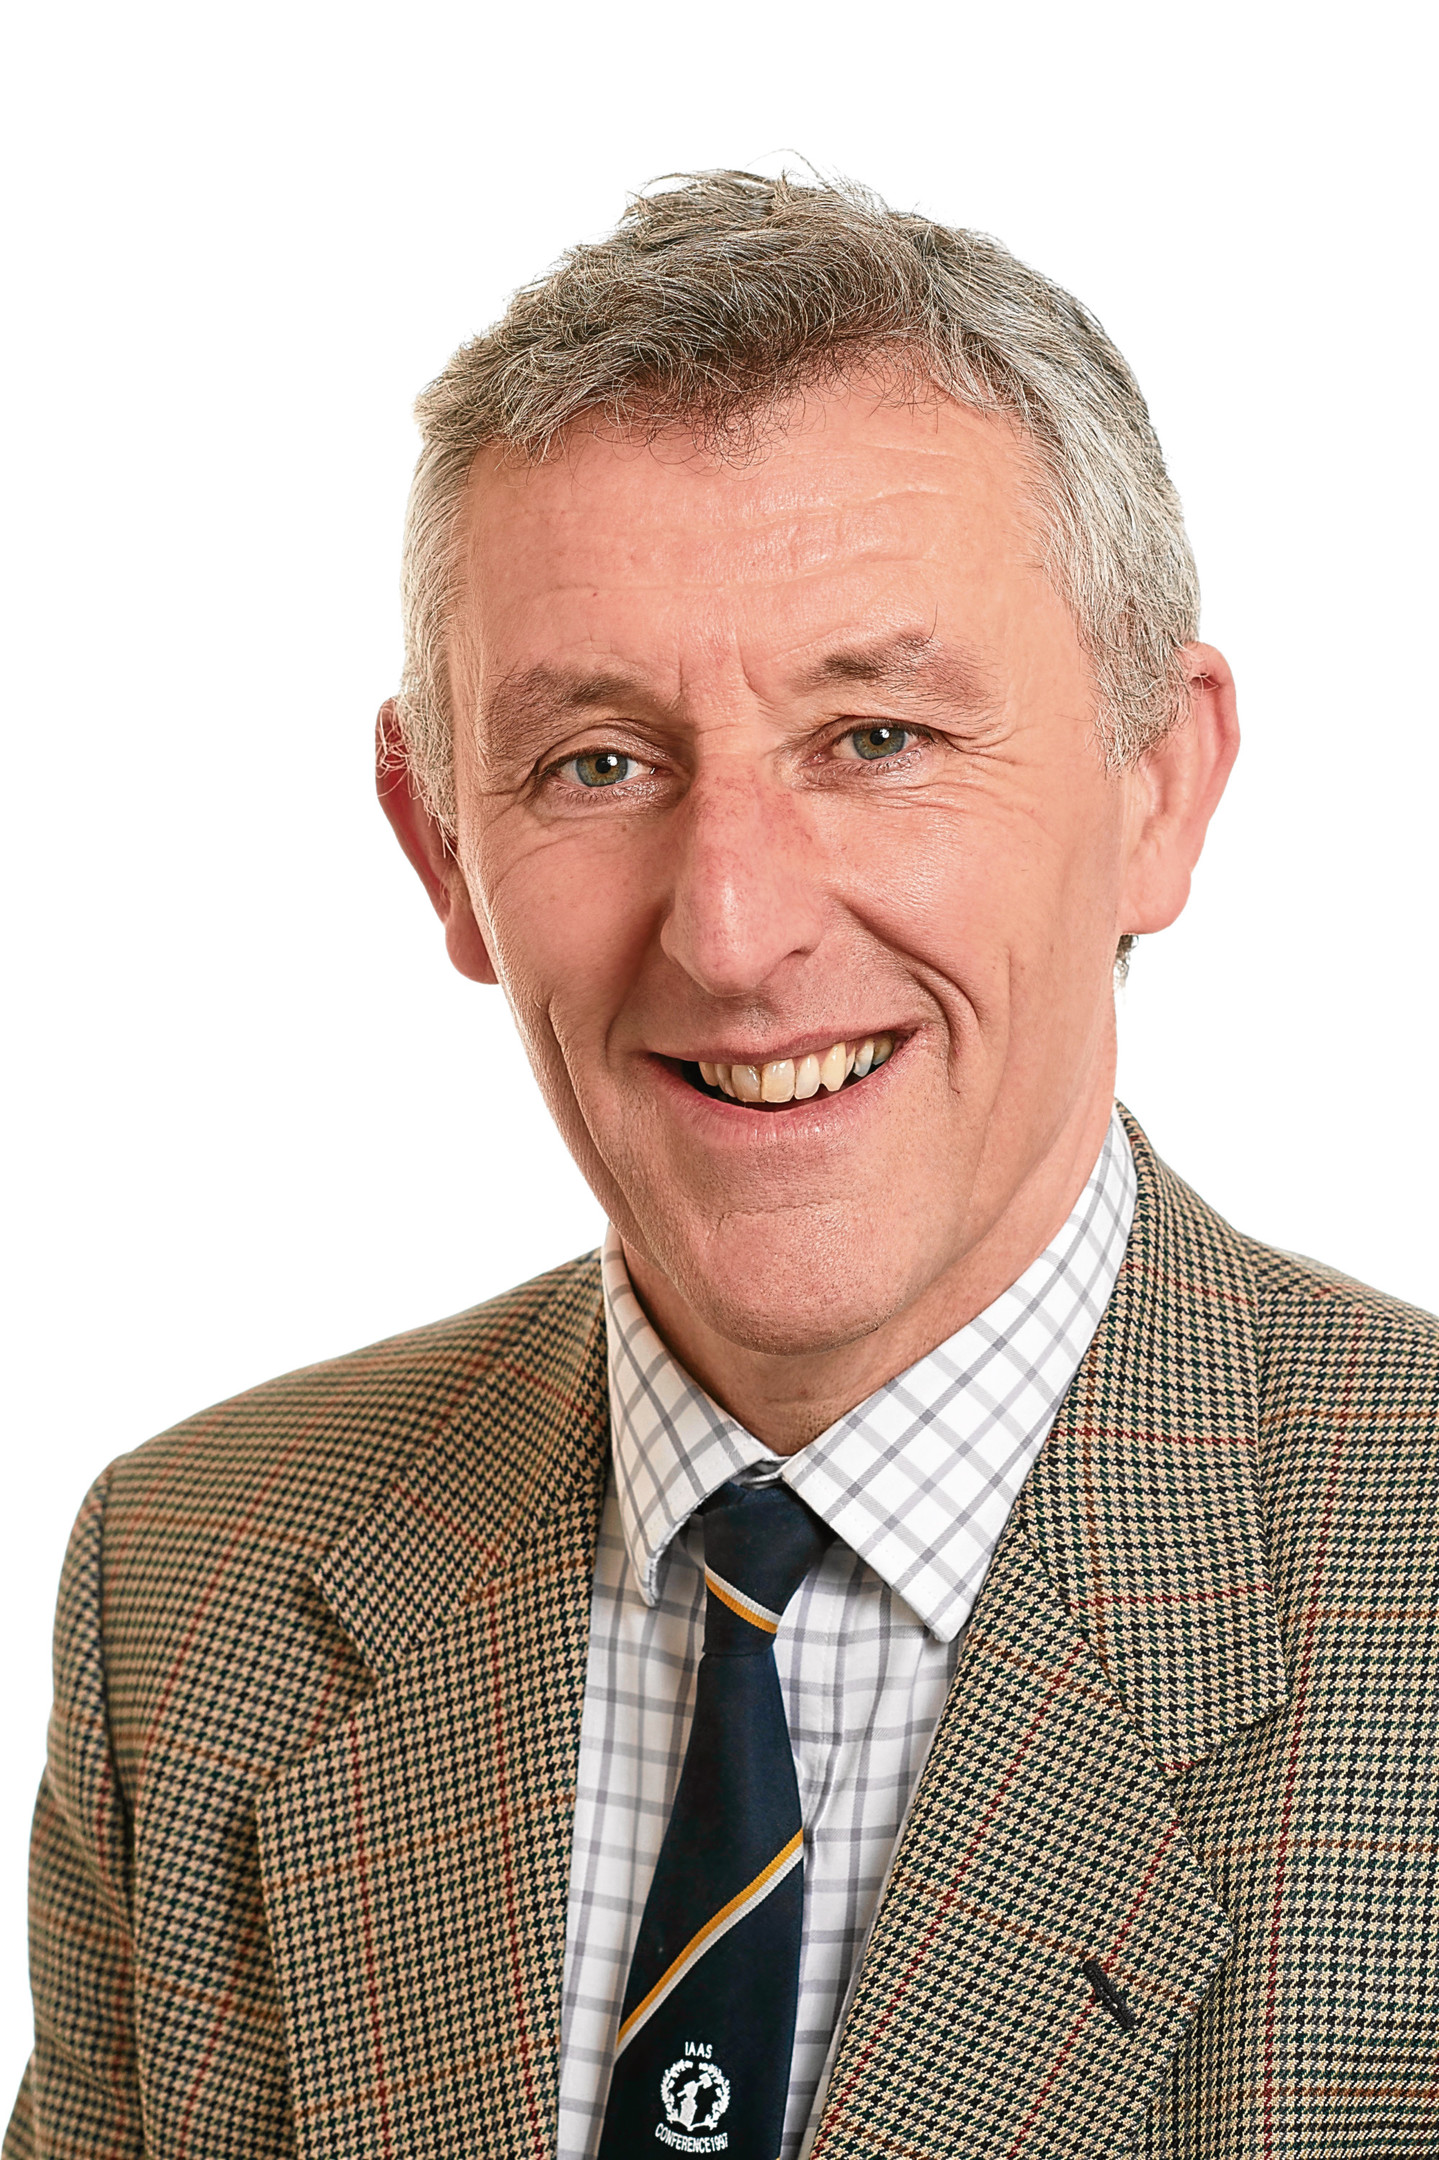 Crofting Commission convener Rod Mackenzie